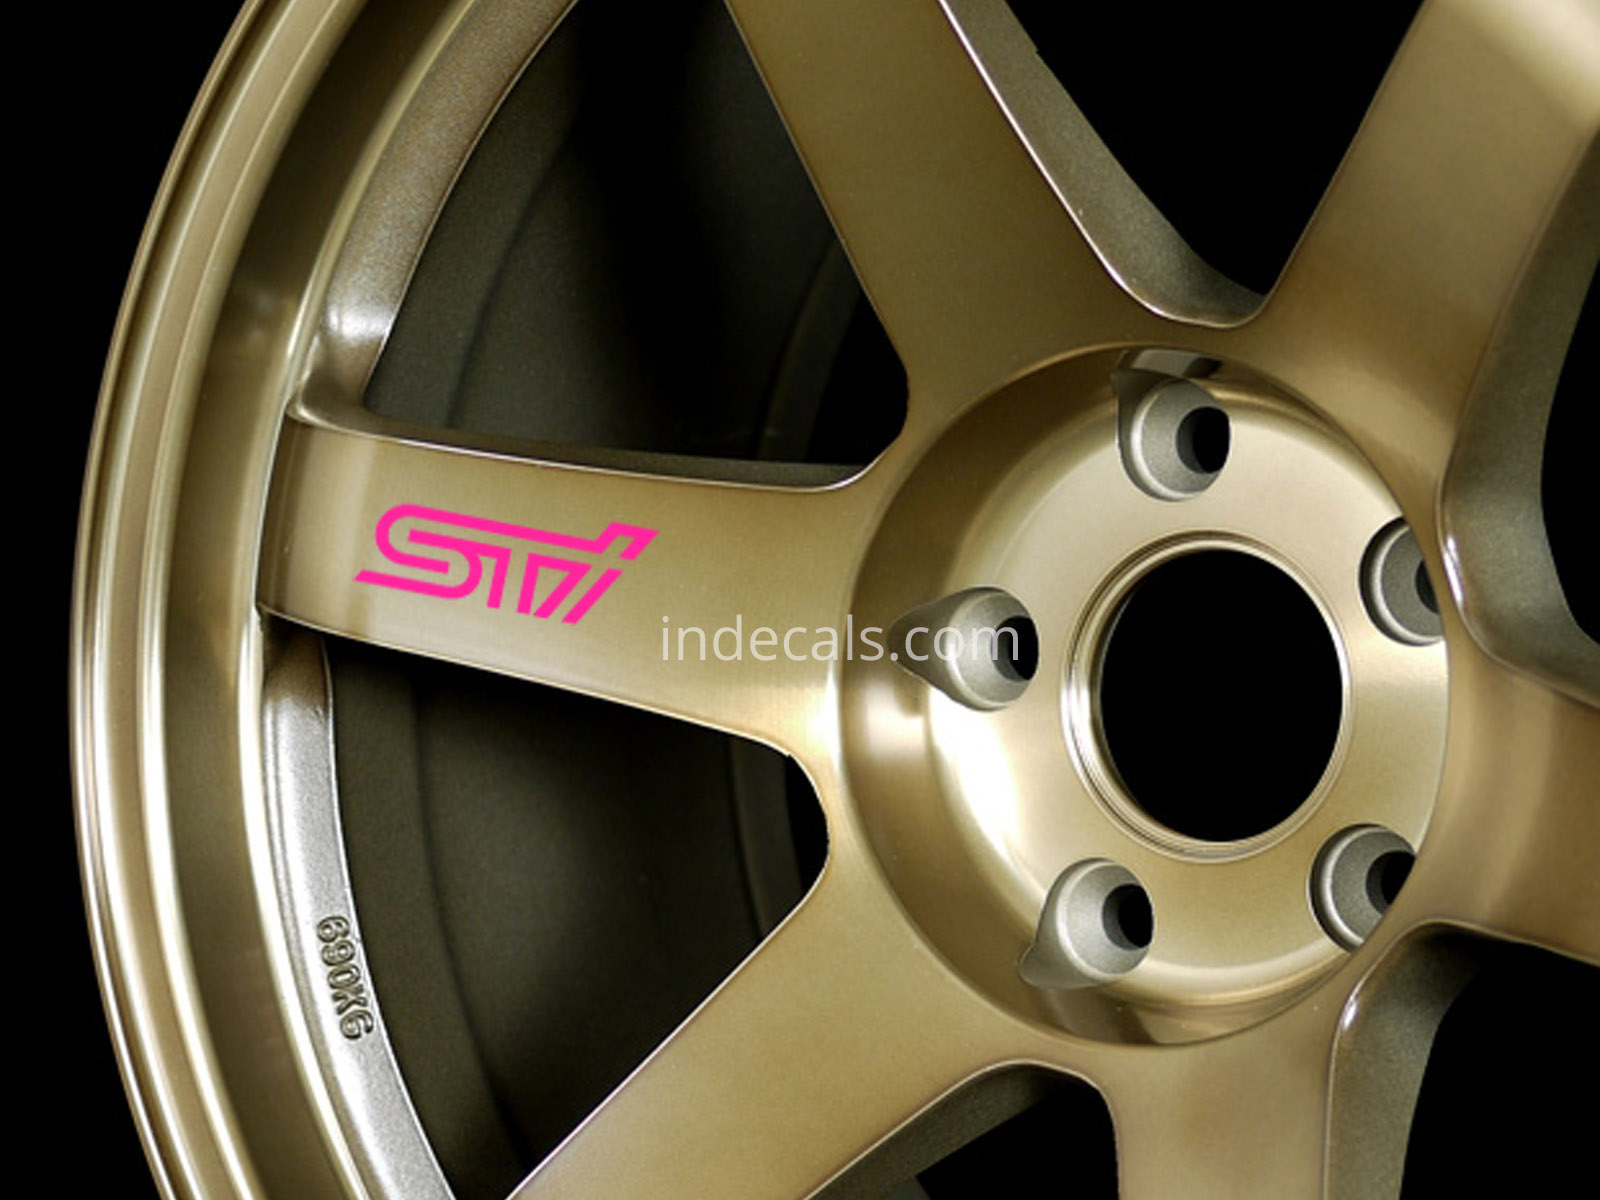 5 x Subaru STI stickers for Wheels - Pink